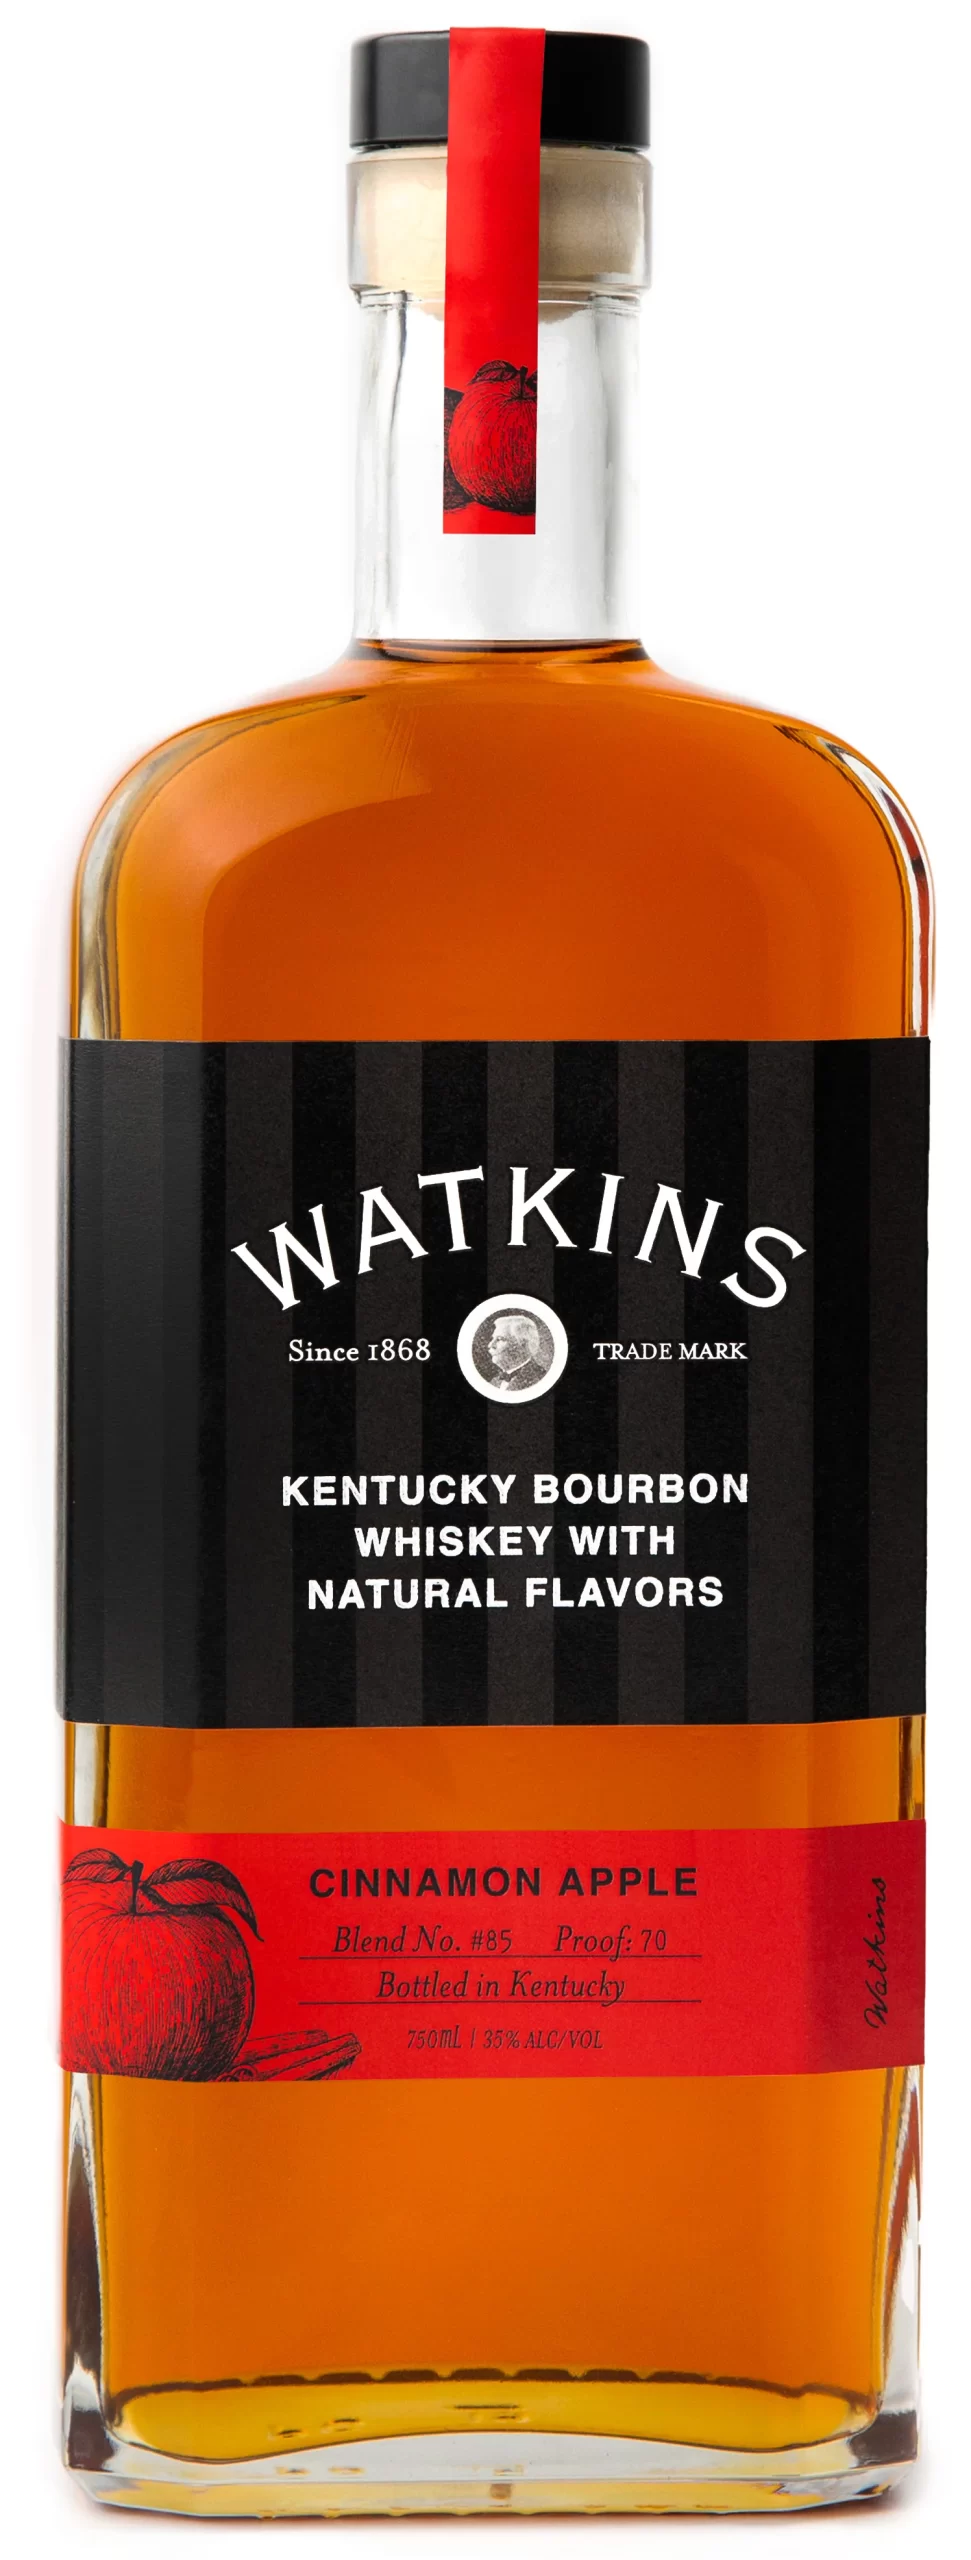 Watkins Cinnamon Apple Bourbon